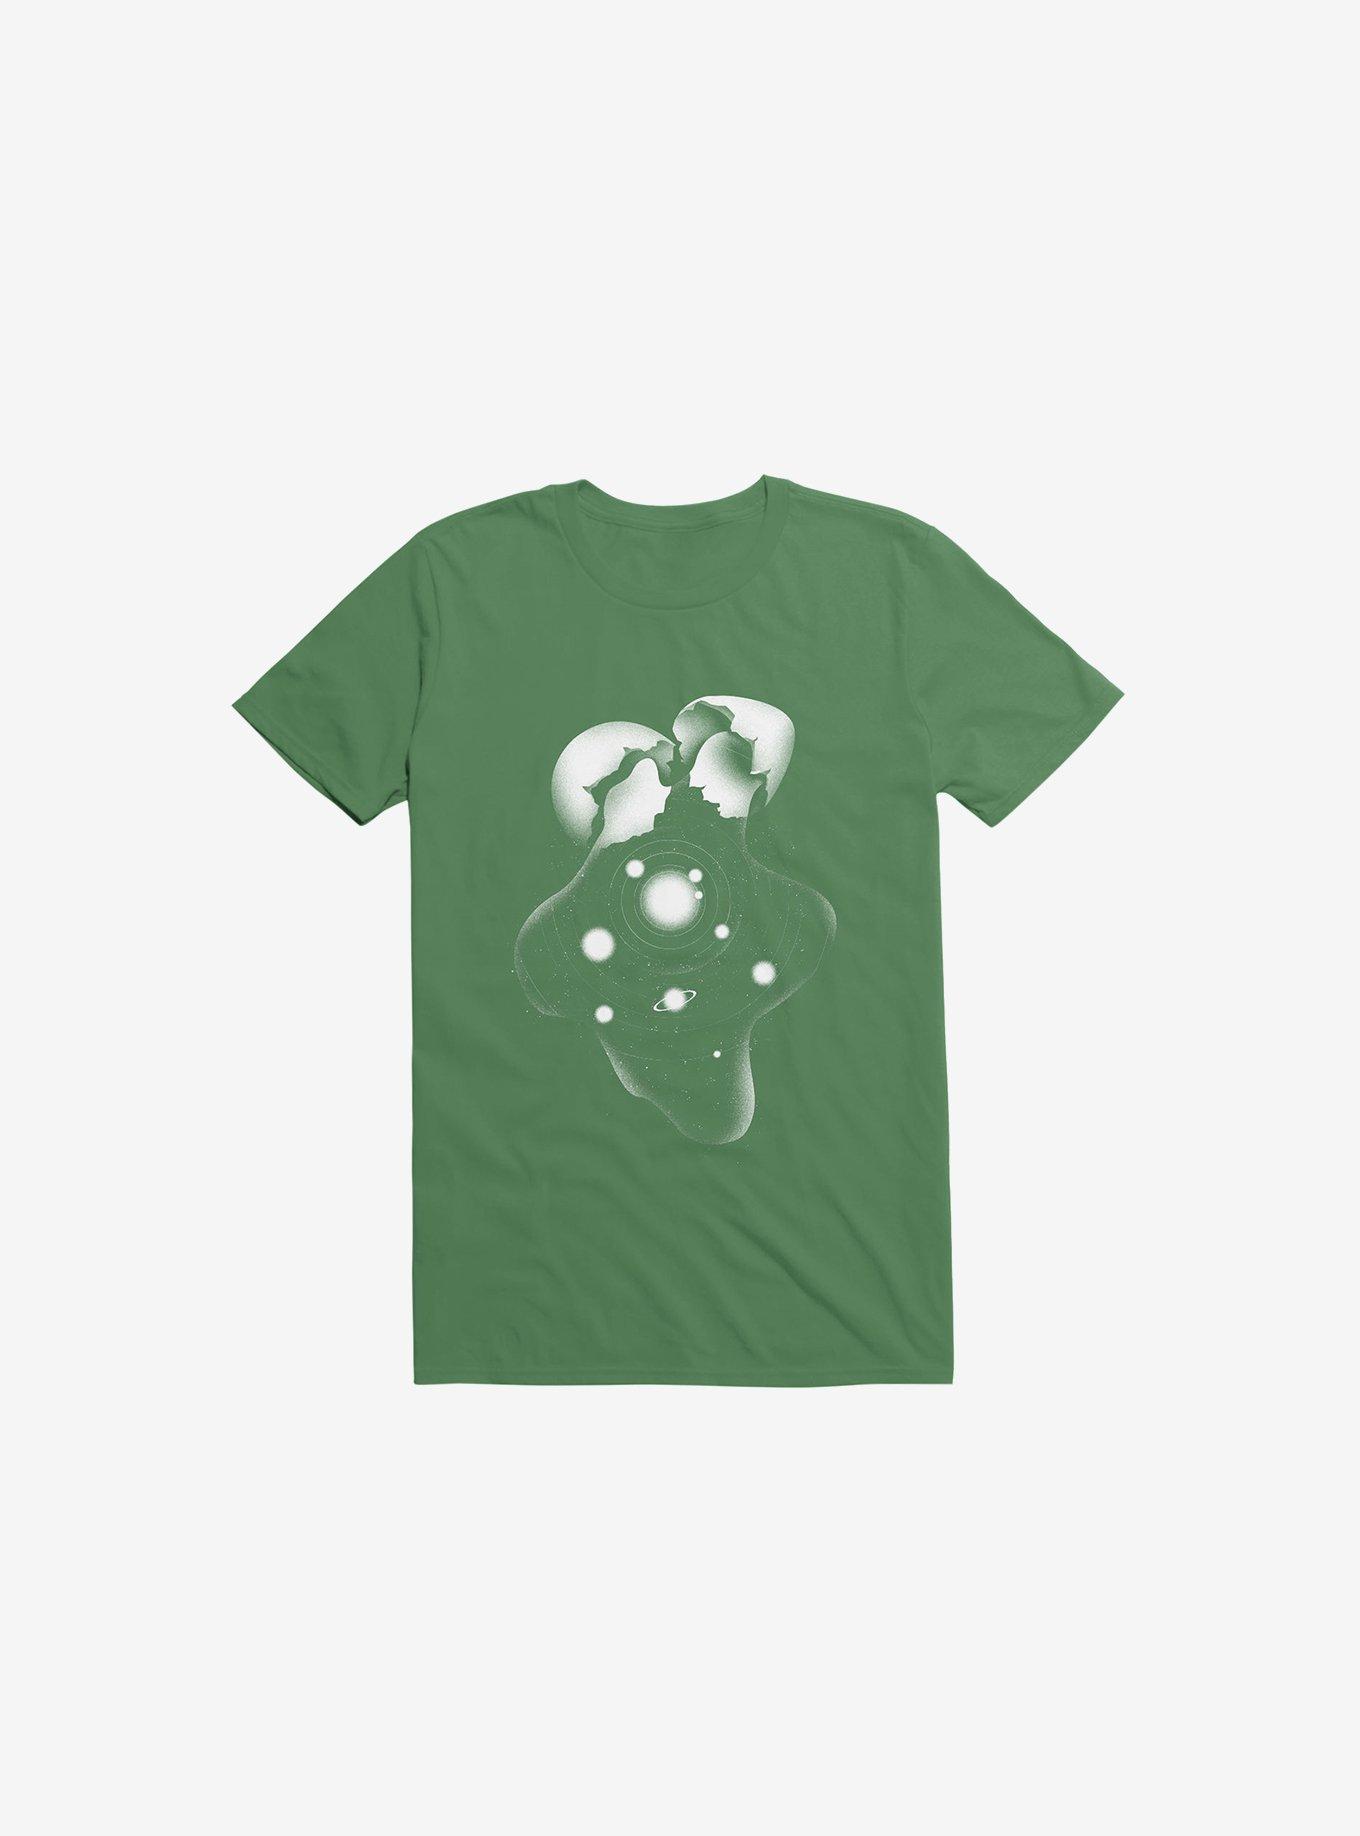 Cosmic Egg Shell Kelly Green T-Shirt